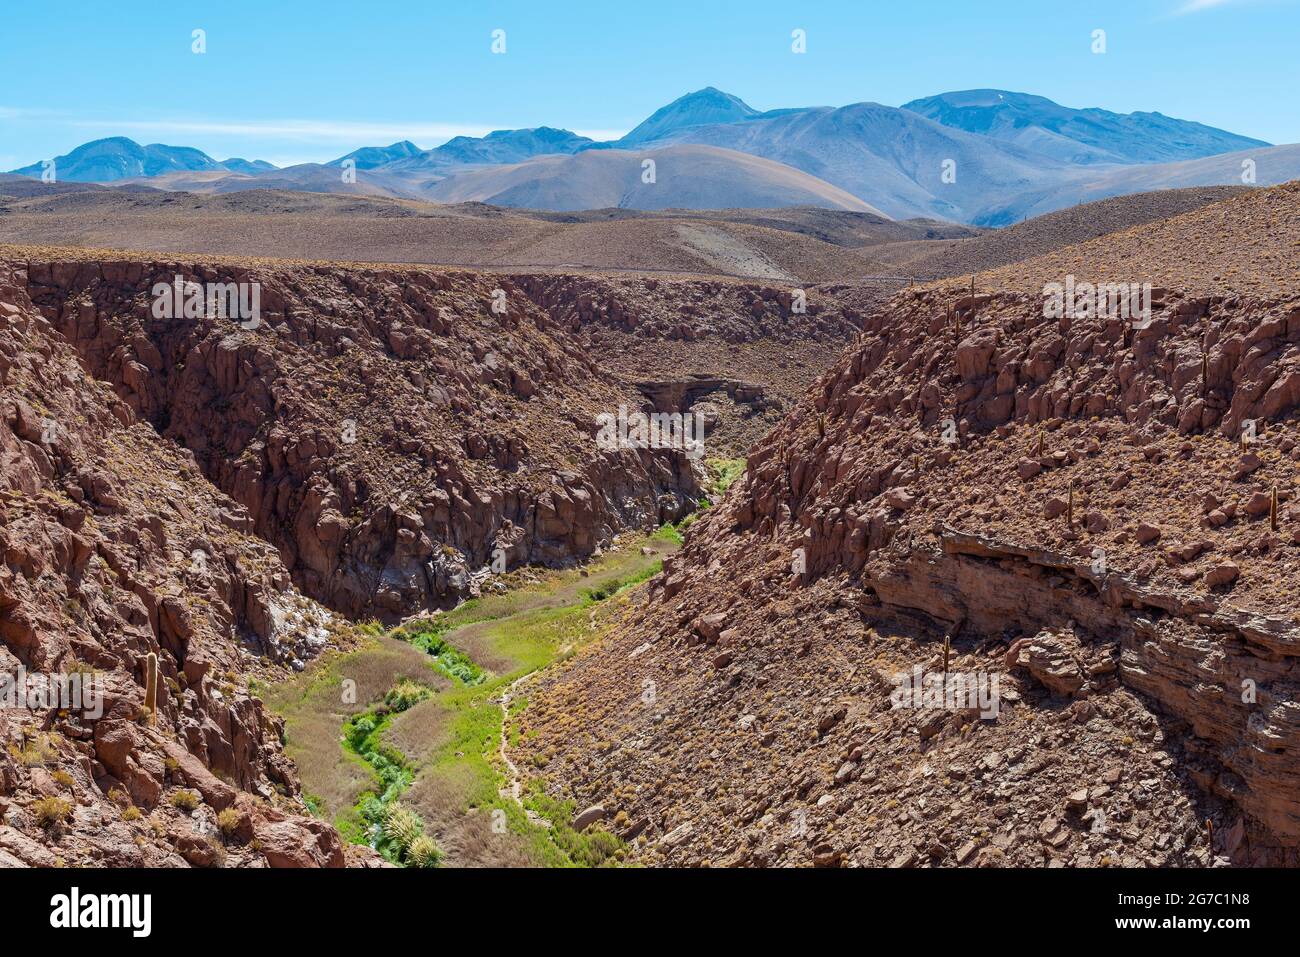 Ruscello raro con verde fertile valle nel arido deserto di Atacama, Cile. Foto Stock